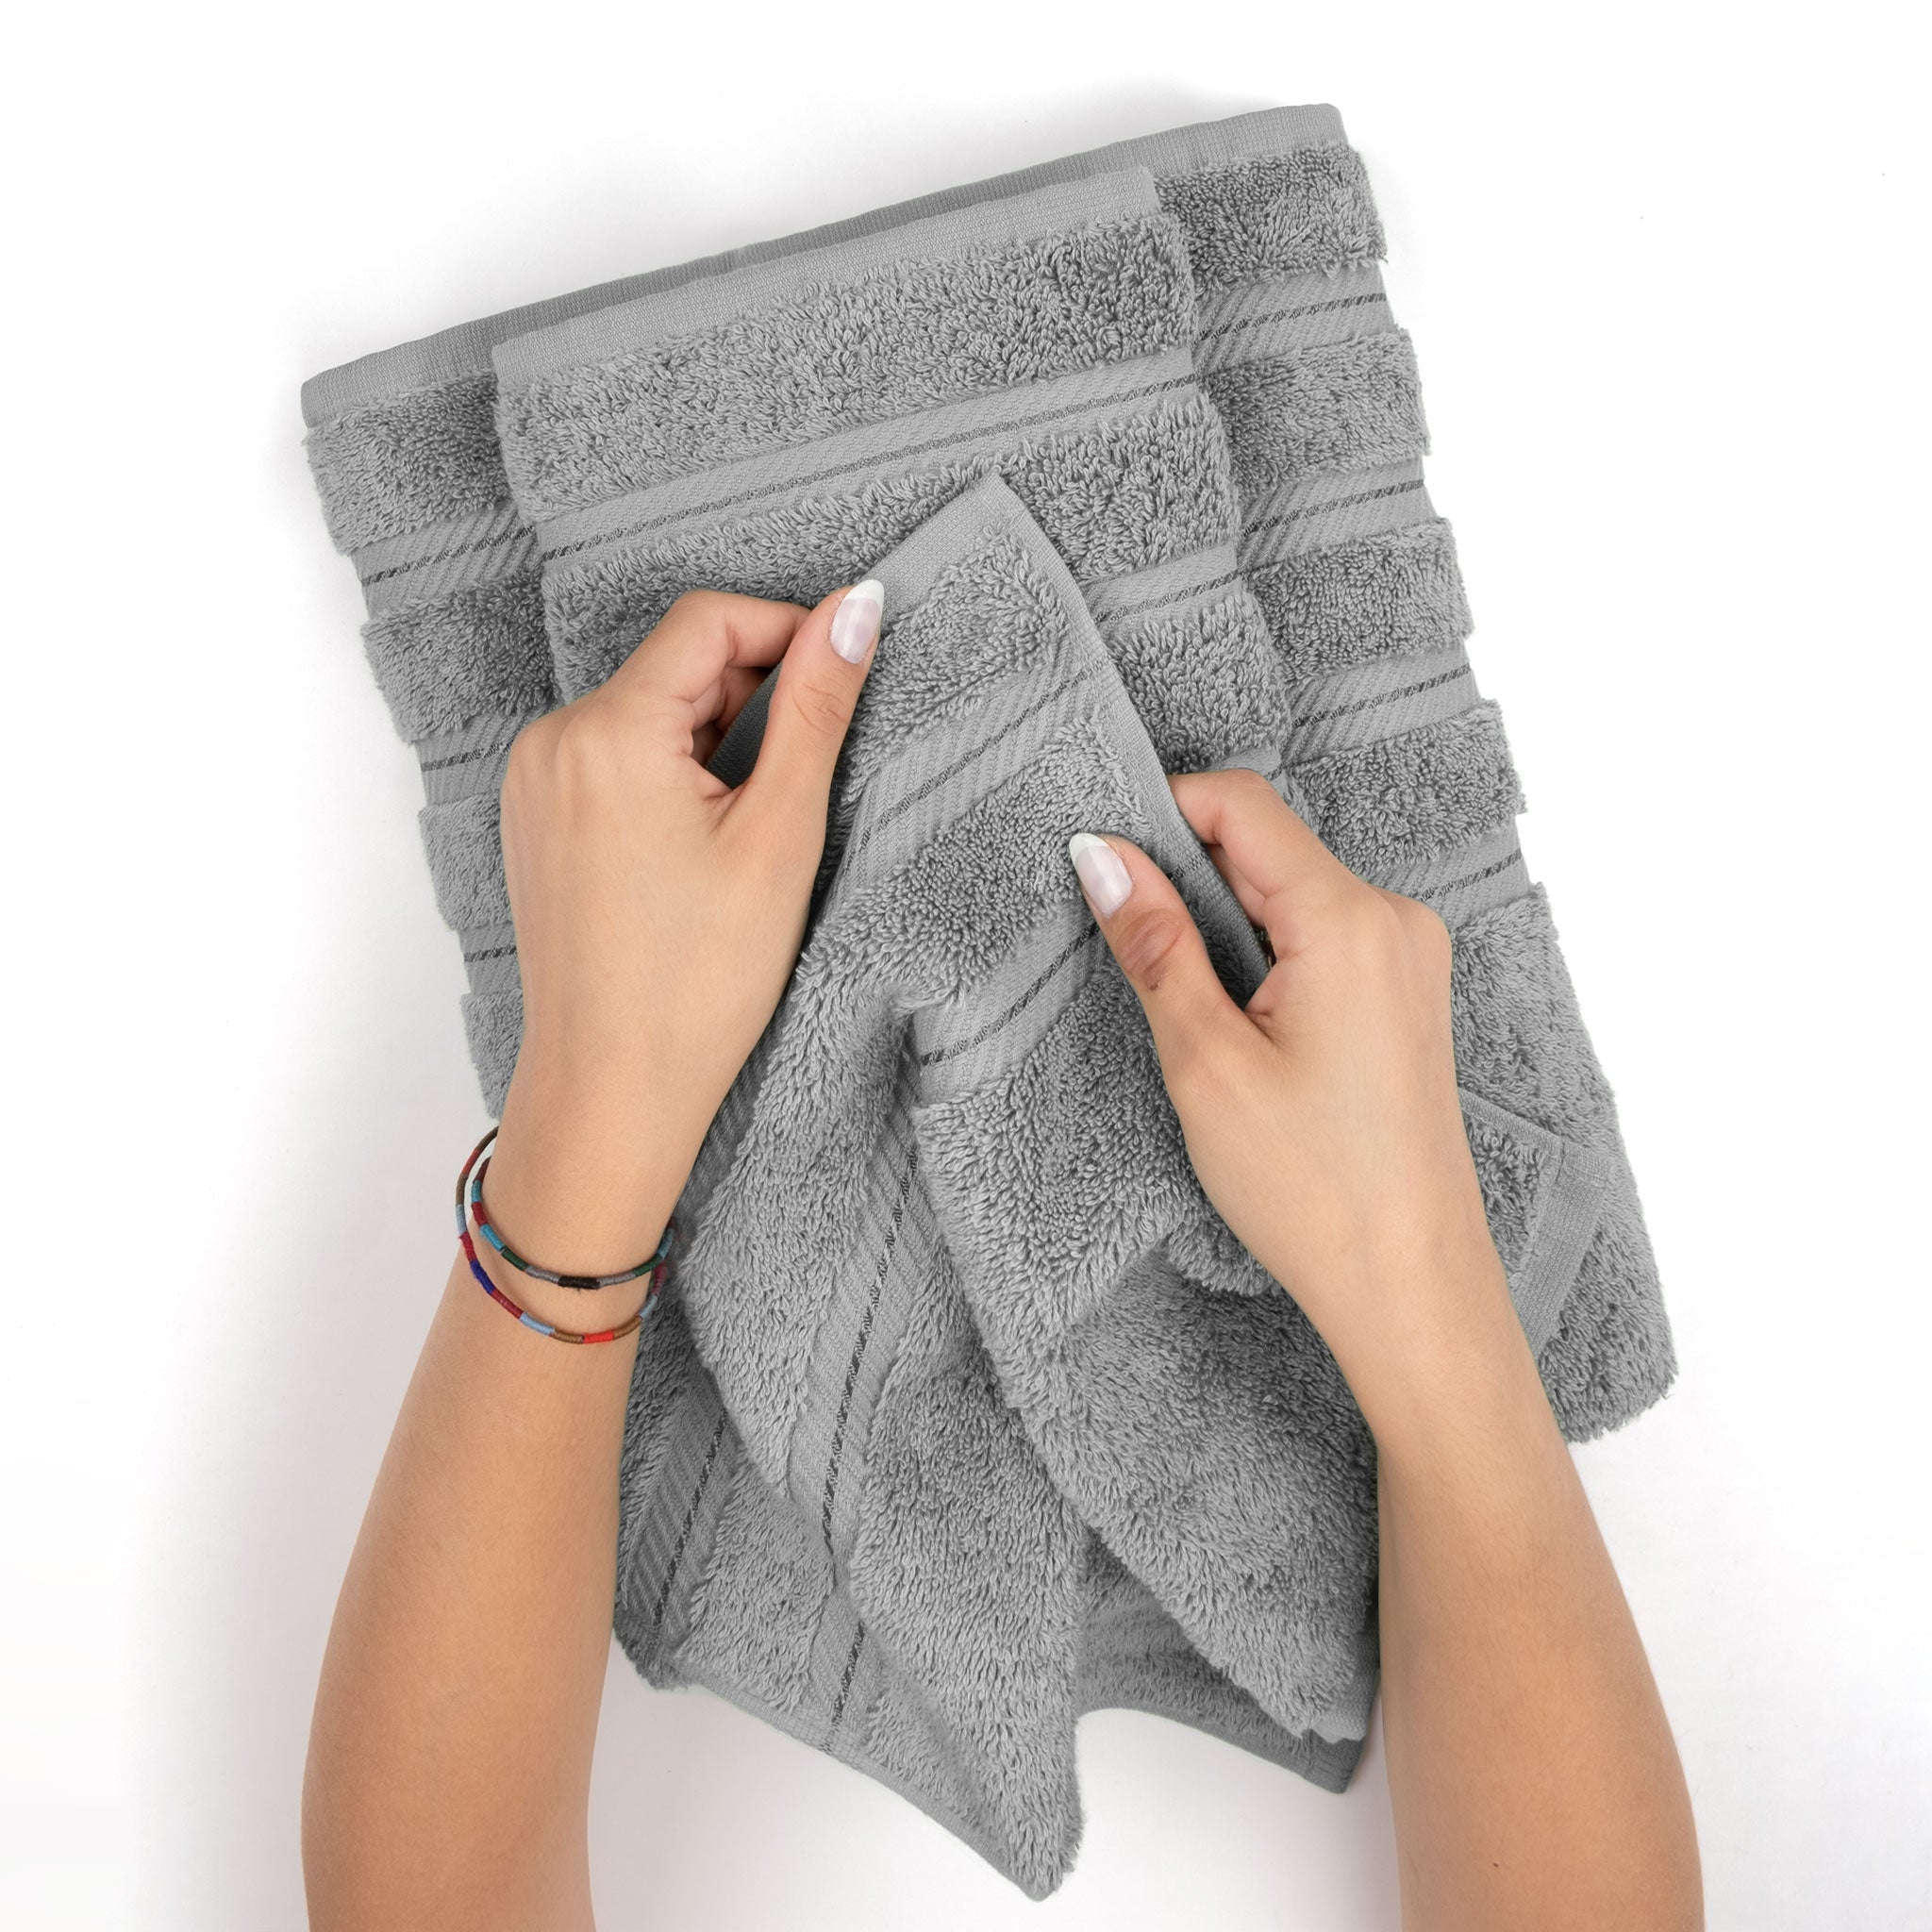 American Soft Linen - 35x70 Jumbo Bath Sheet Turkish Bath Towel - 16 Piece Case Pack - Rockridge-Gray - 4